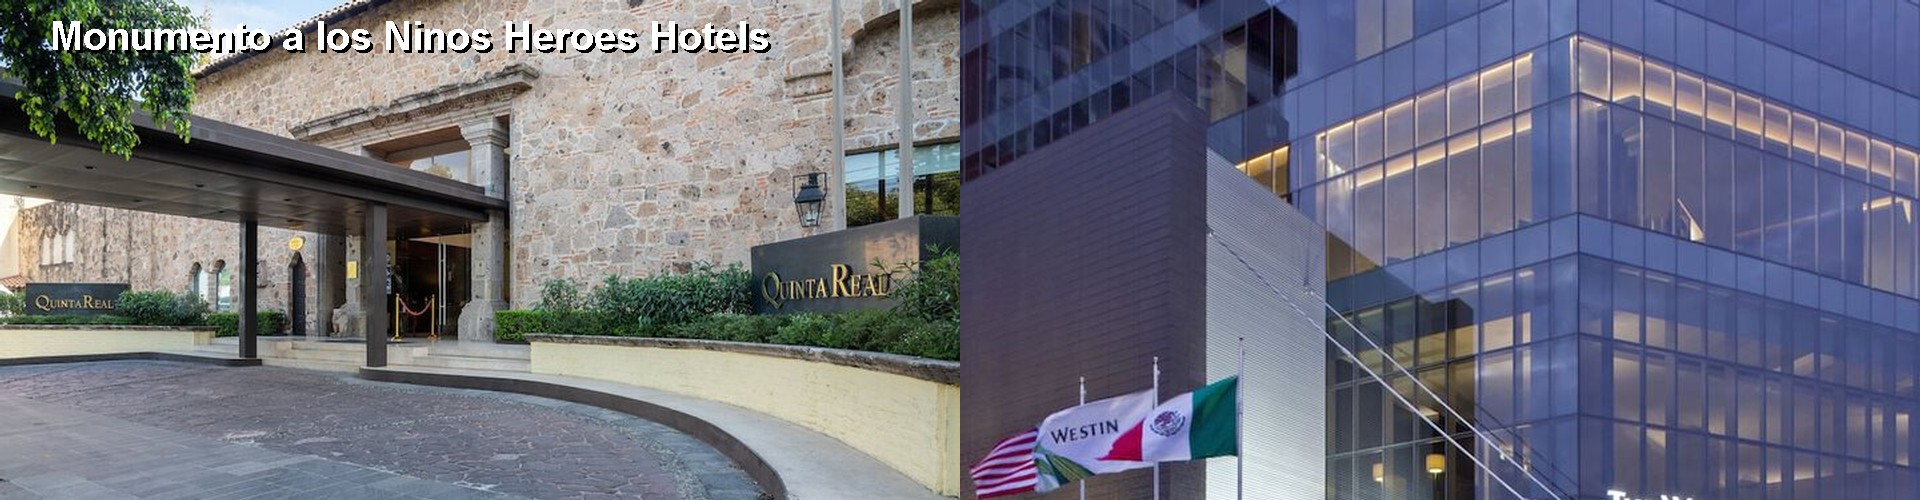 5 Best Hotels near Monumento a los Ninos Heroes